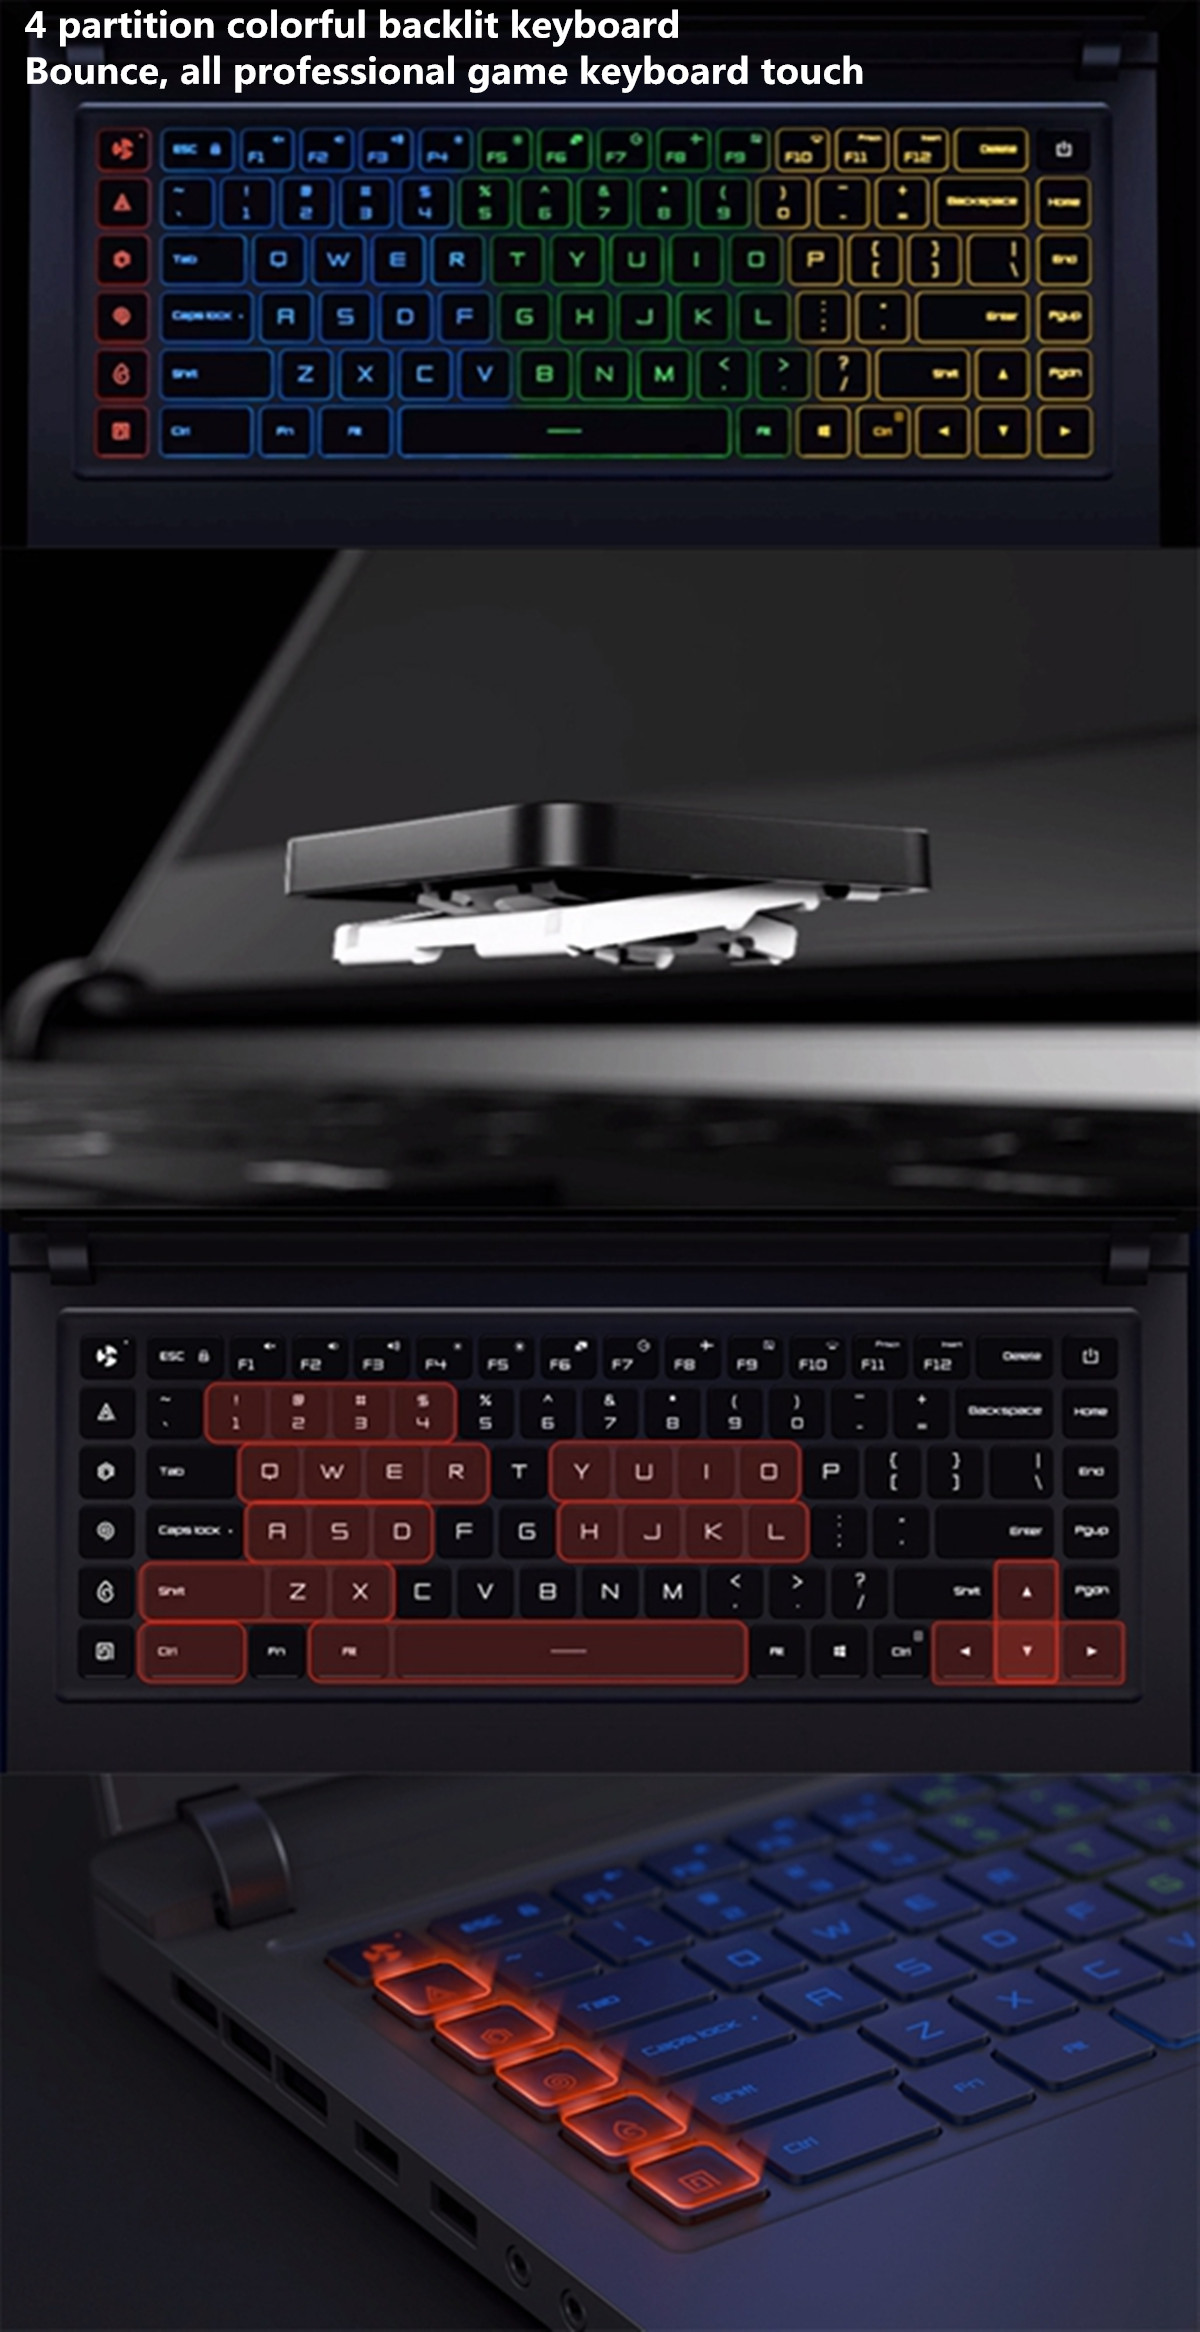 Original-Xiaomi-Gaming-Laptop-Intel-Core-i5-7300HQ-GTX-1060-8G1T128G-SSD-156-inch-Mi-Notebook-1283261